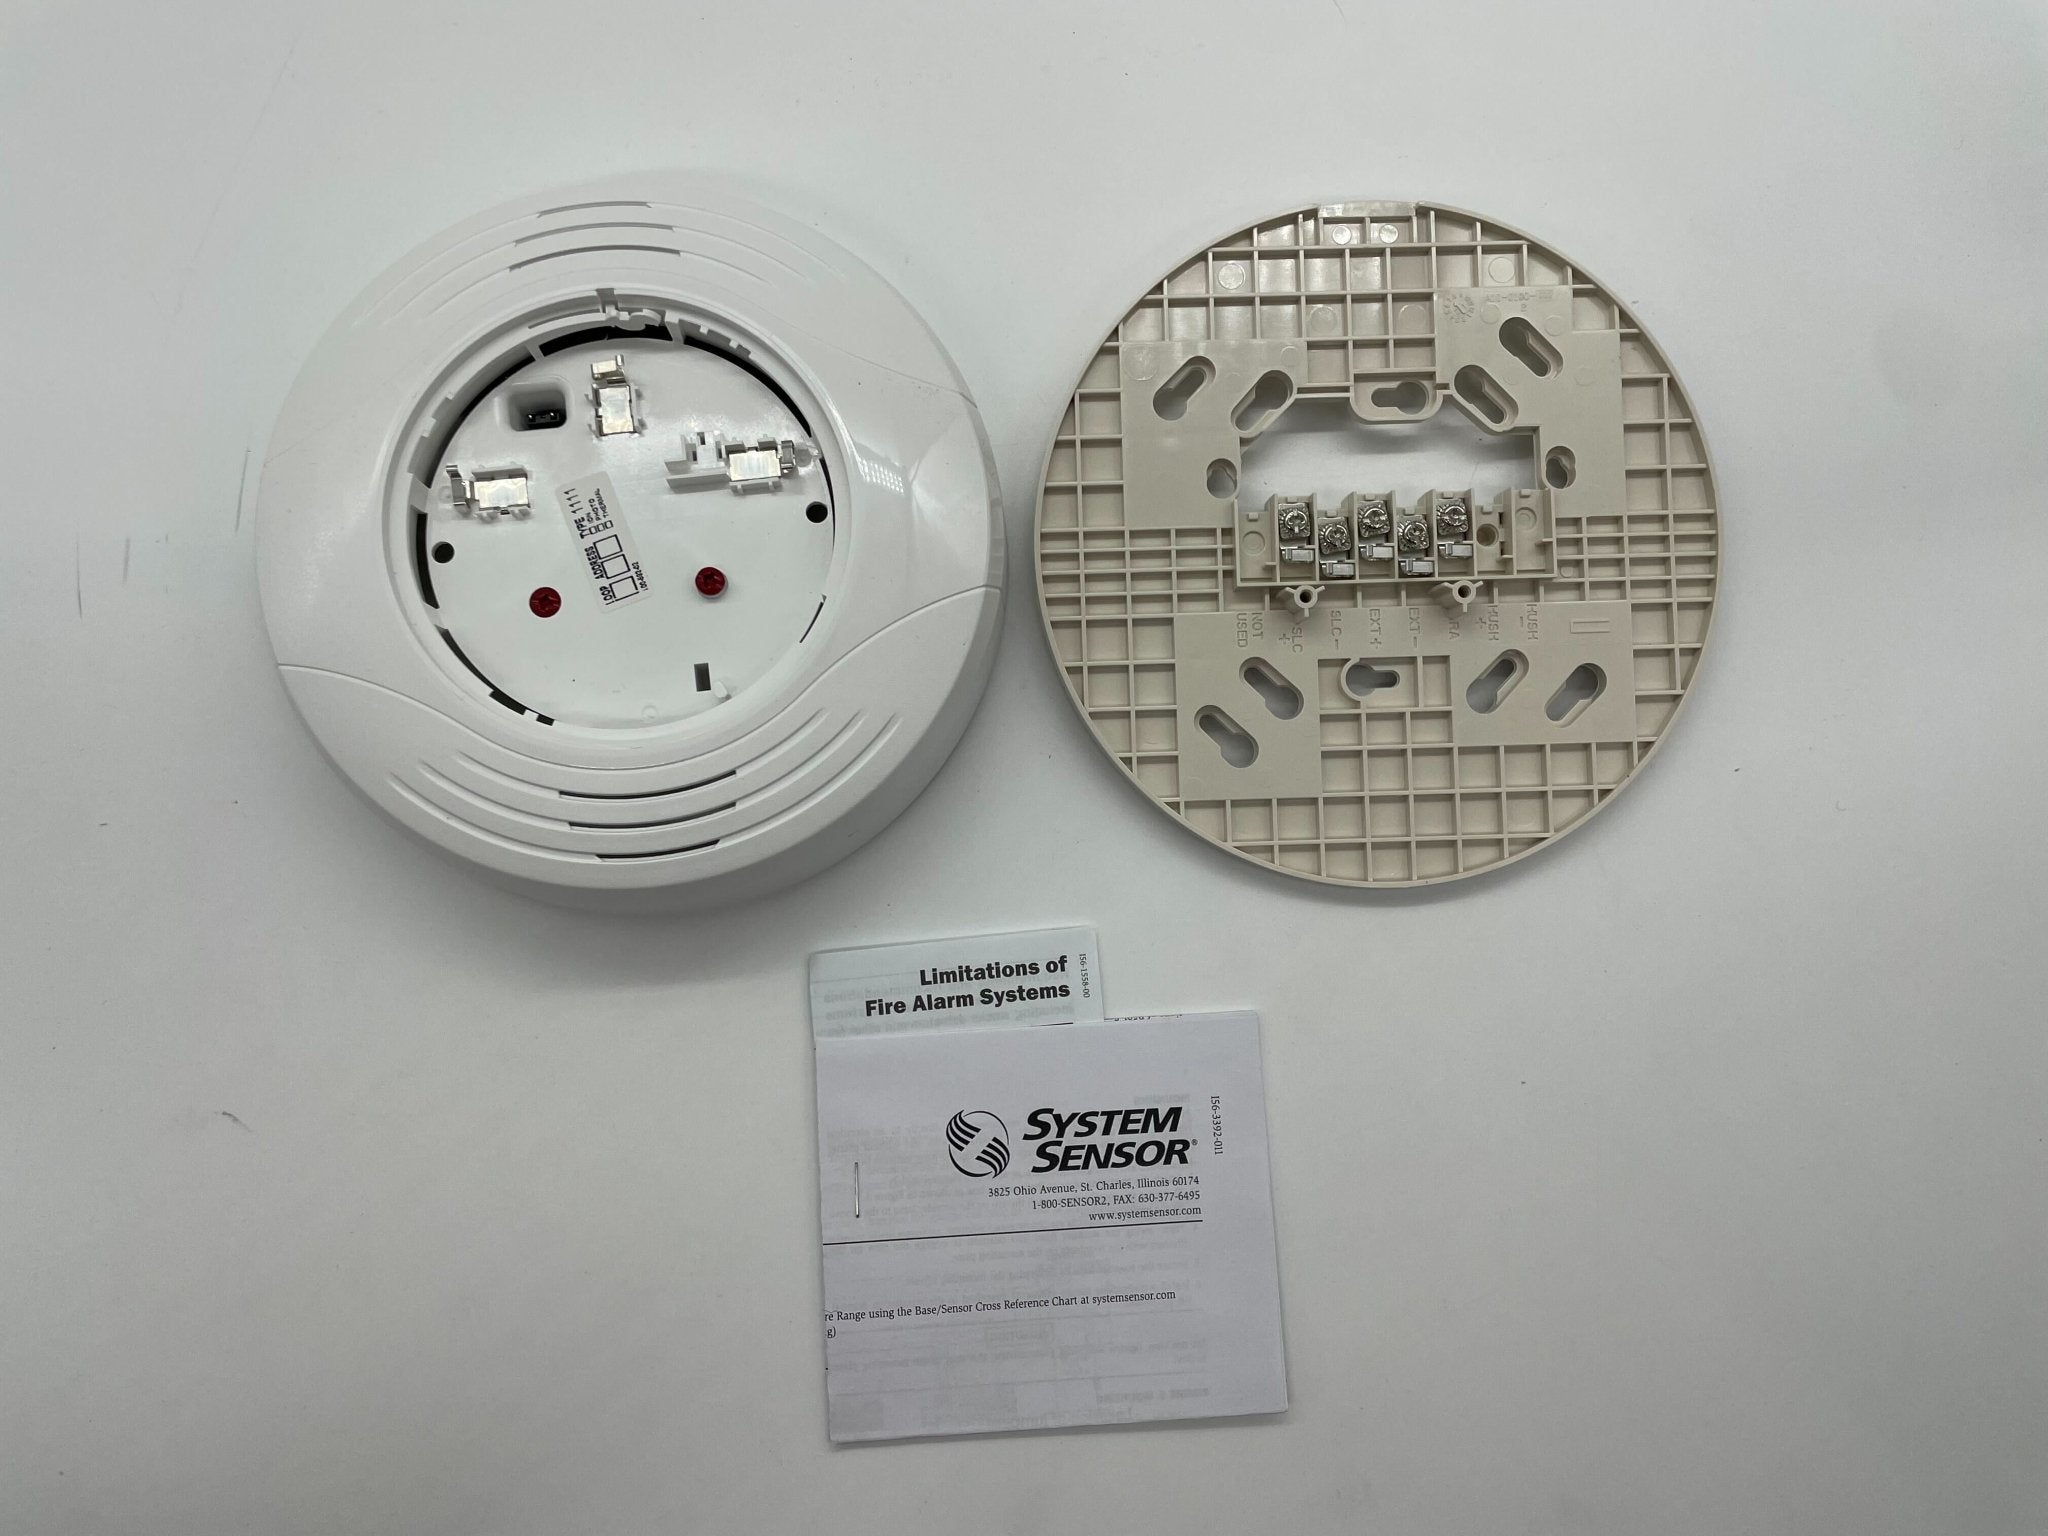 System Sensor B200SR-WH - The Fire Alarm Supplier